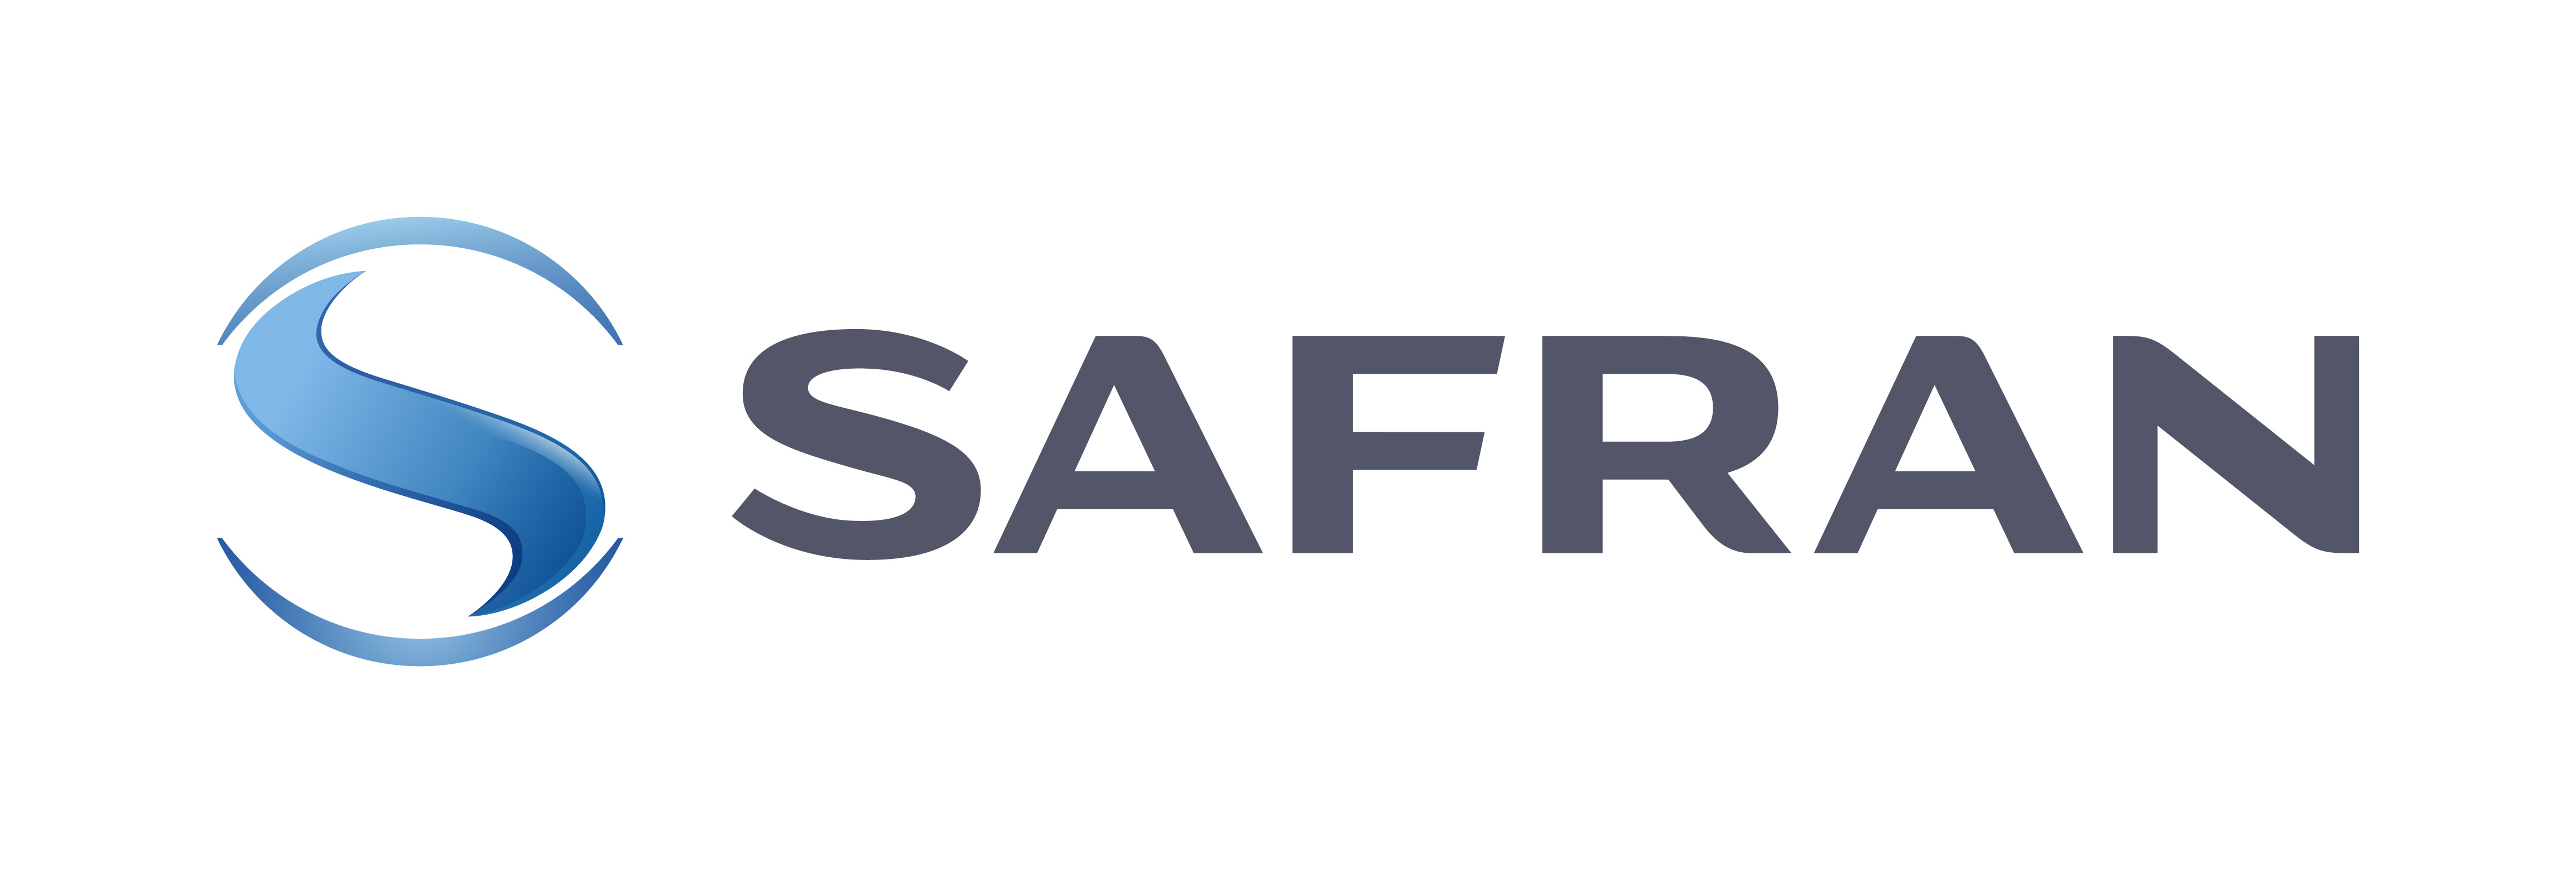 Safran logo 01162020